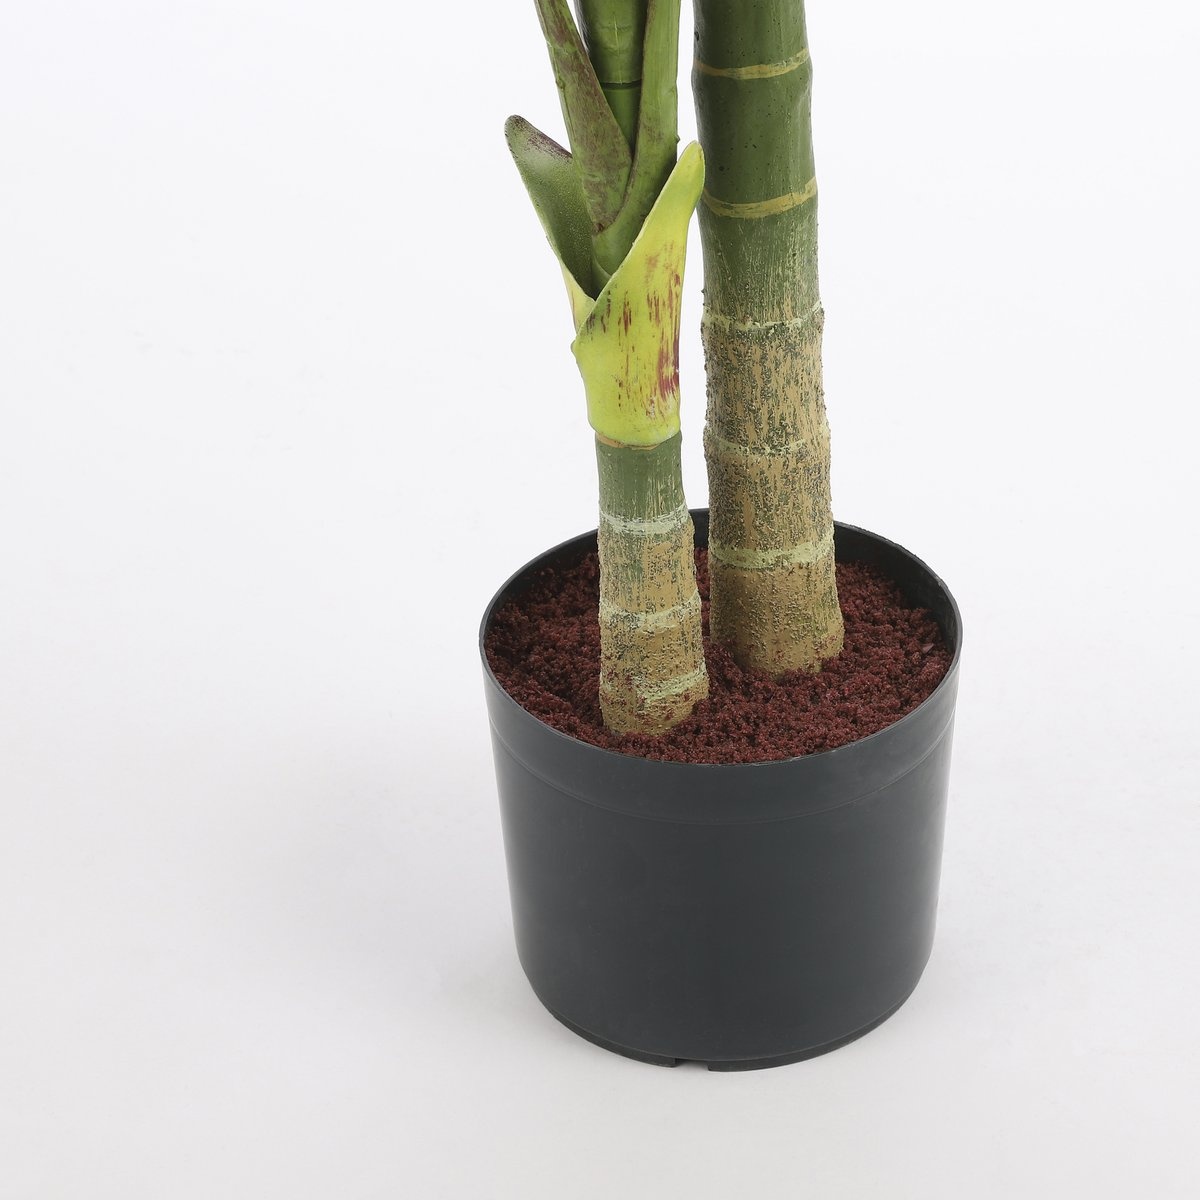 KantoormeubelenPlus Areca palm Kunstplant - H120 x Ø100 cm - Groen